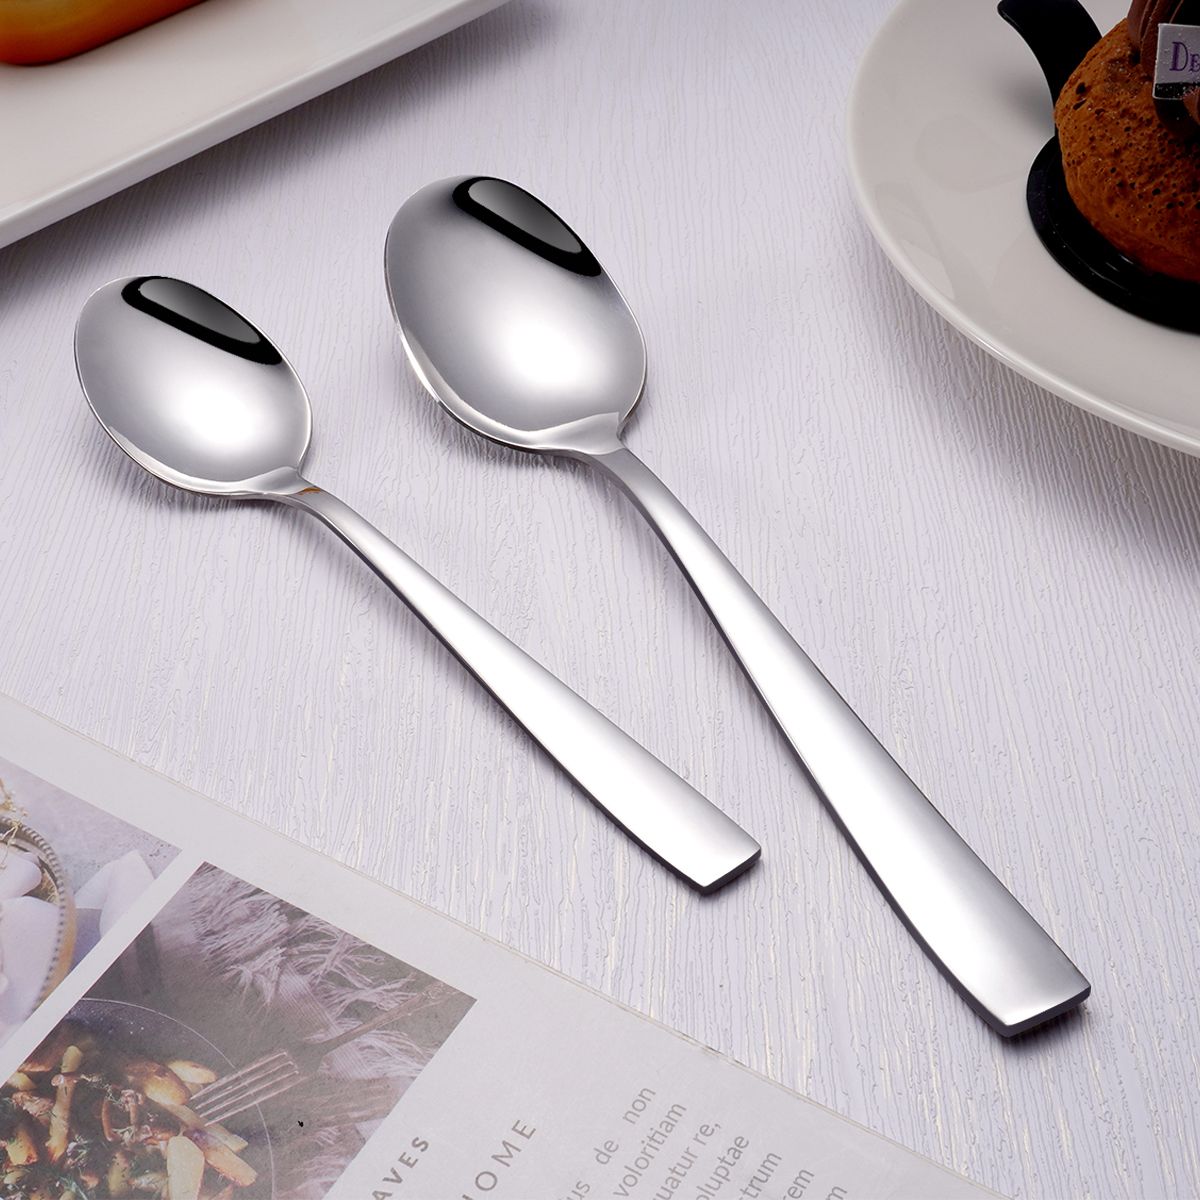 Wedding Spoons Cheap Silverware Rada Cutlery Wholesale Gold Flatware Bulk